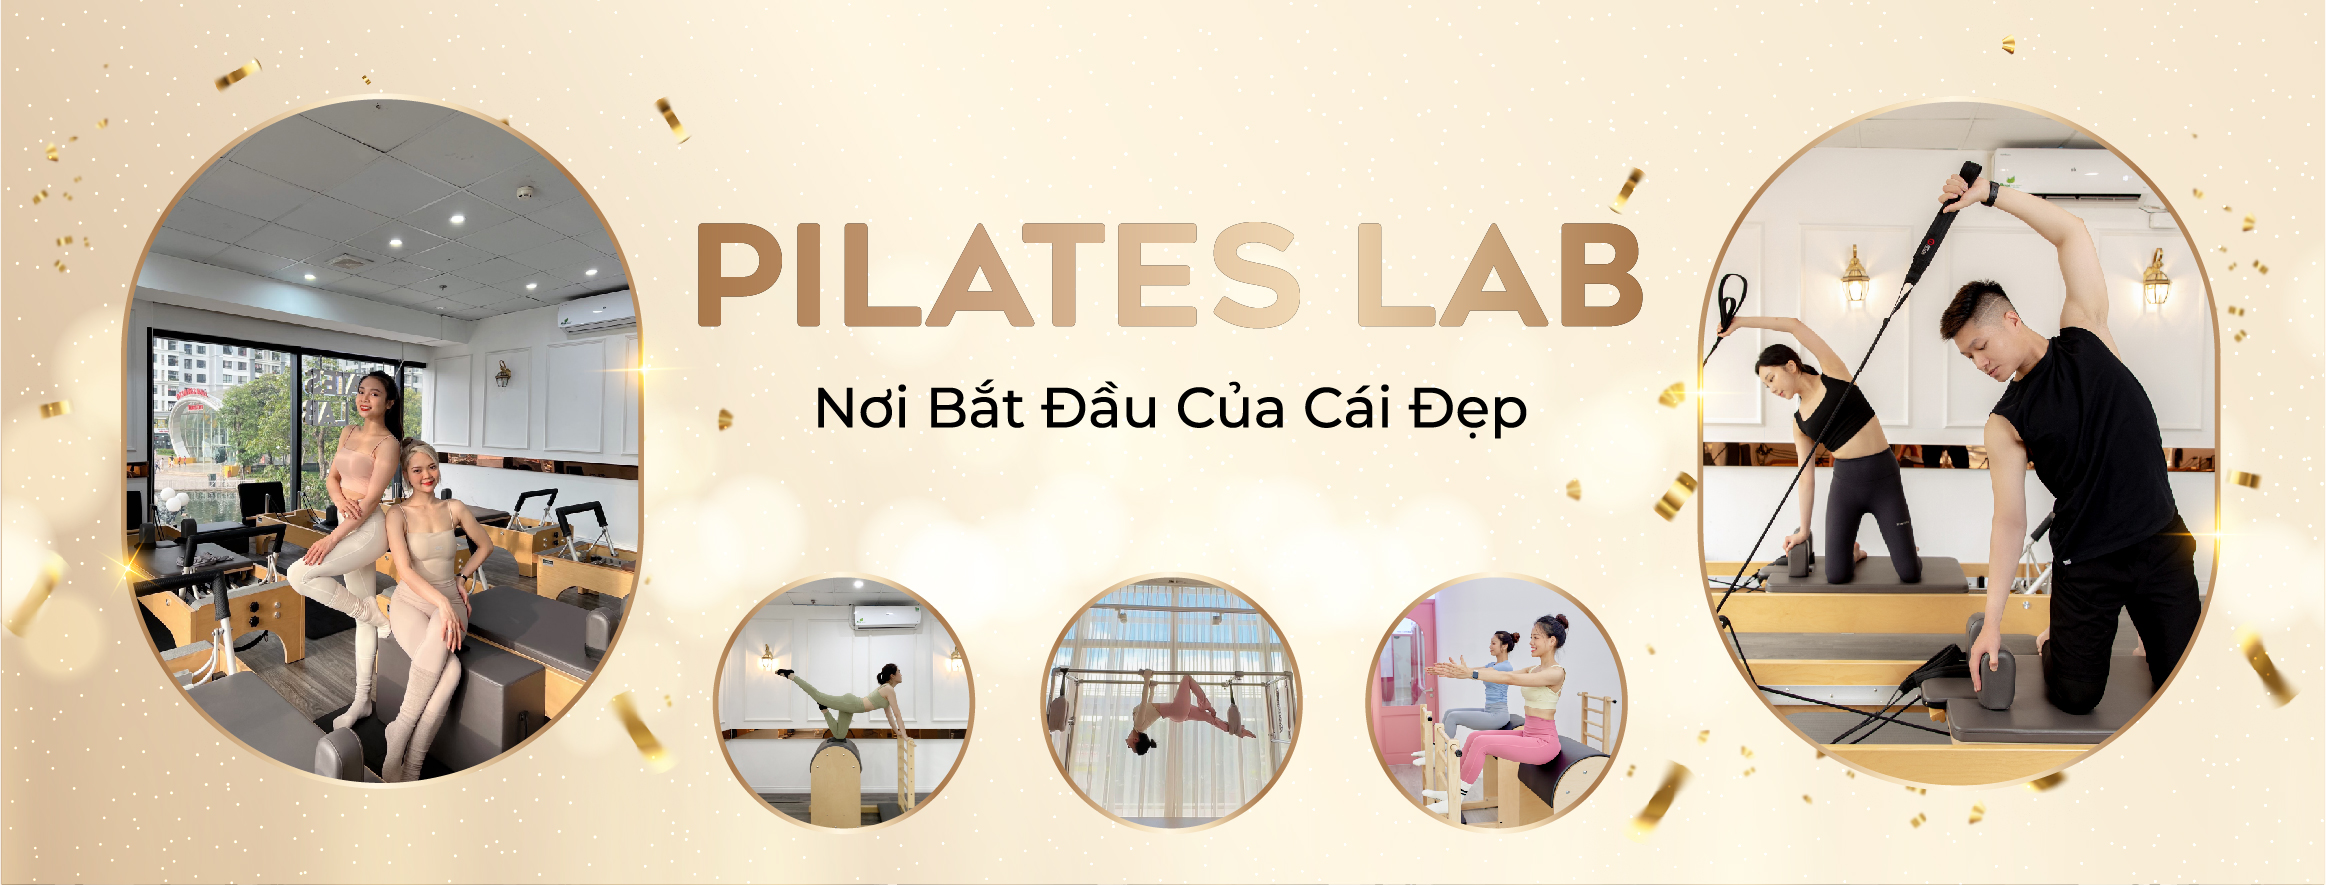 Pilates LAB Việt Nam